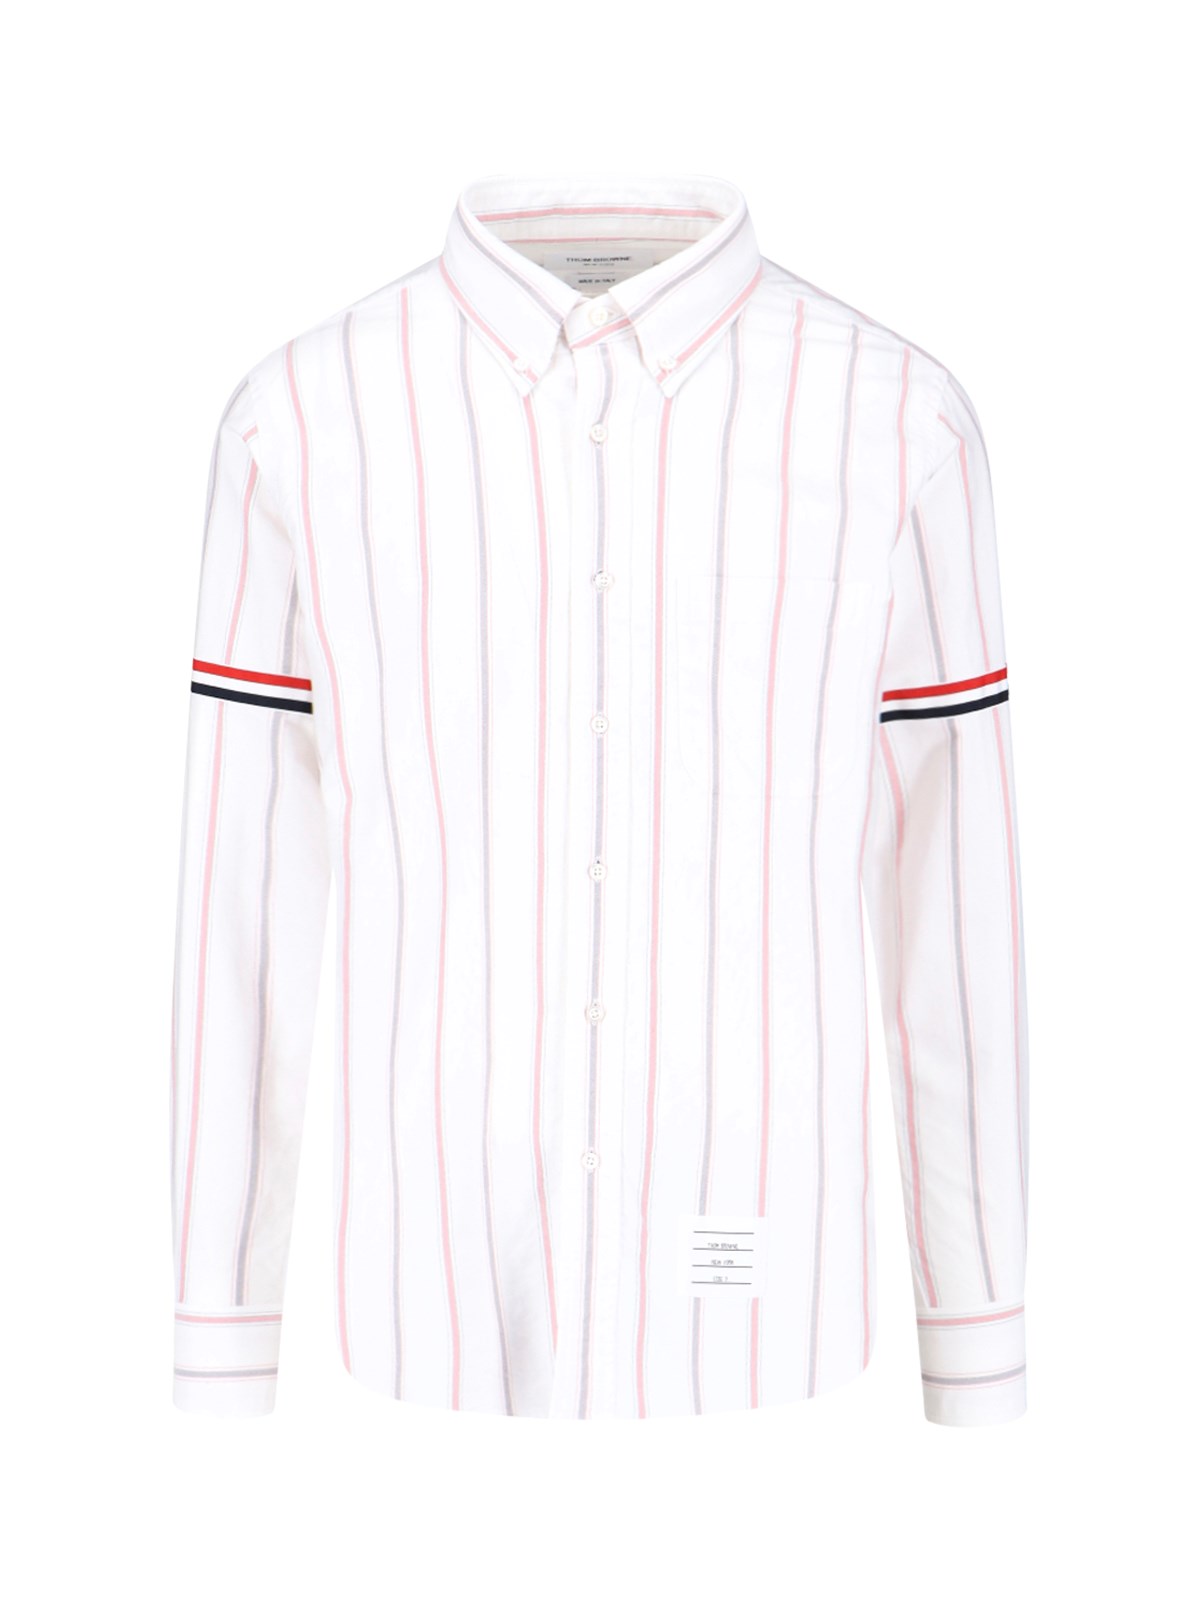 Thom Browne Stripe Shirt In White